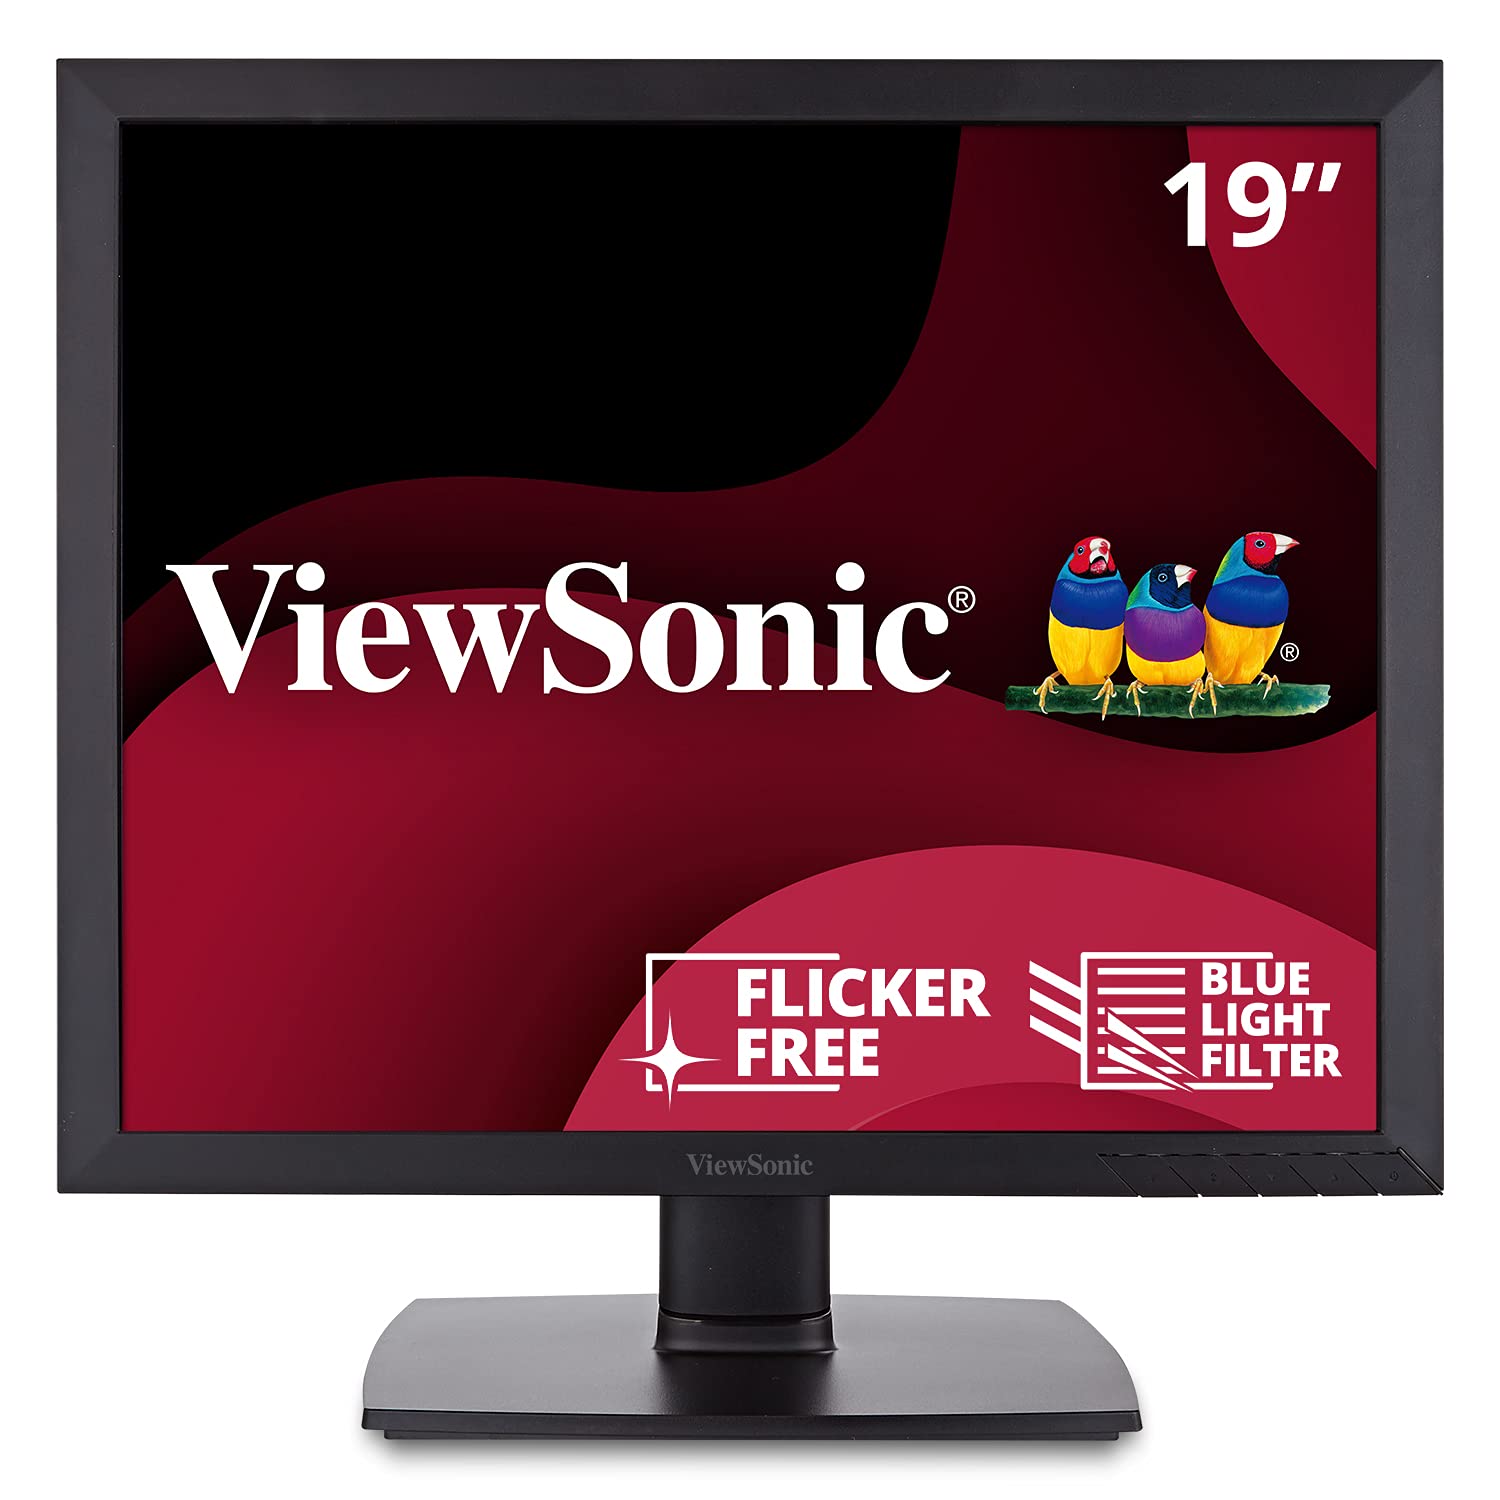 Viewsonic VA951S 19 Inch IPS 1024p LED Monitor with DVI...